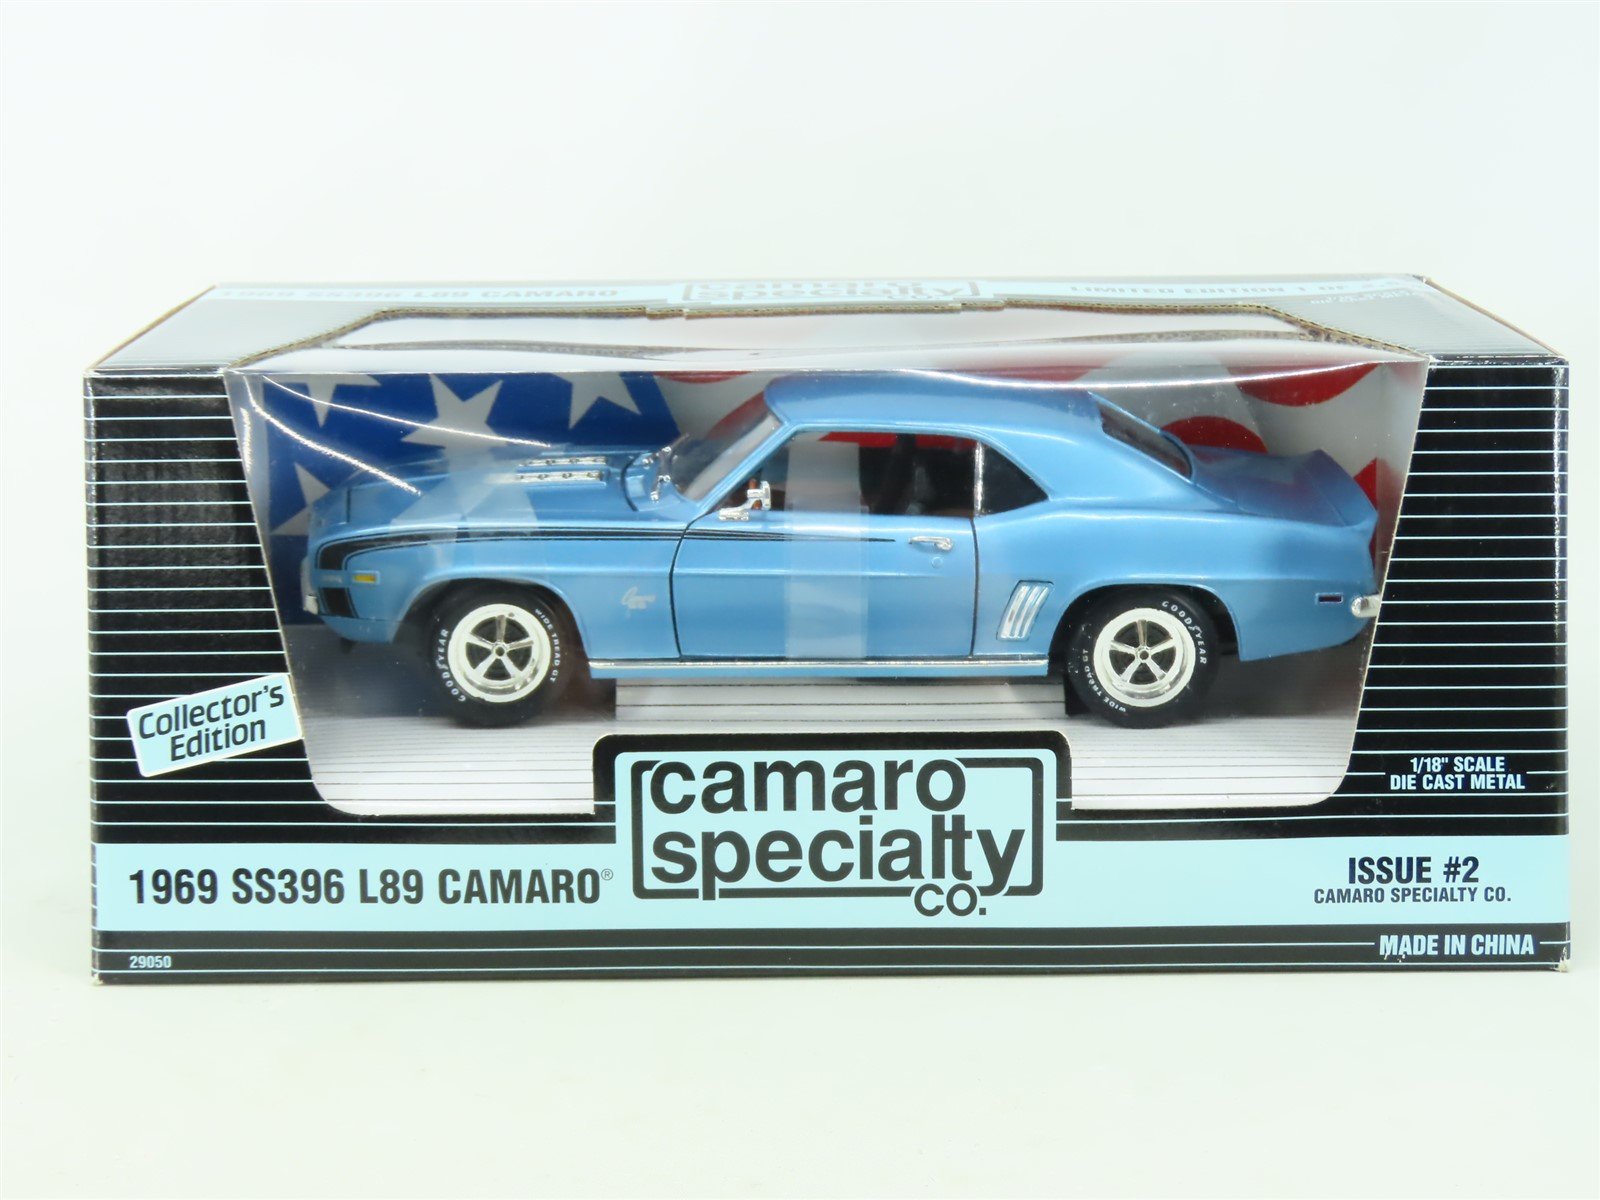 1:18 Scale Ertl Camaro Specialty Co. #29050 Diecast 1969 SS396 L89 Camaro - Blue